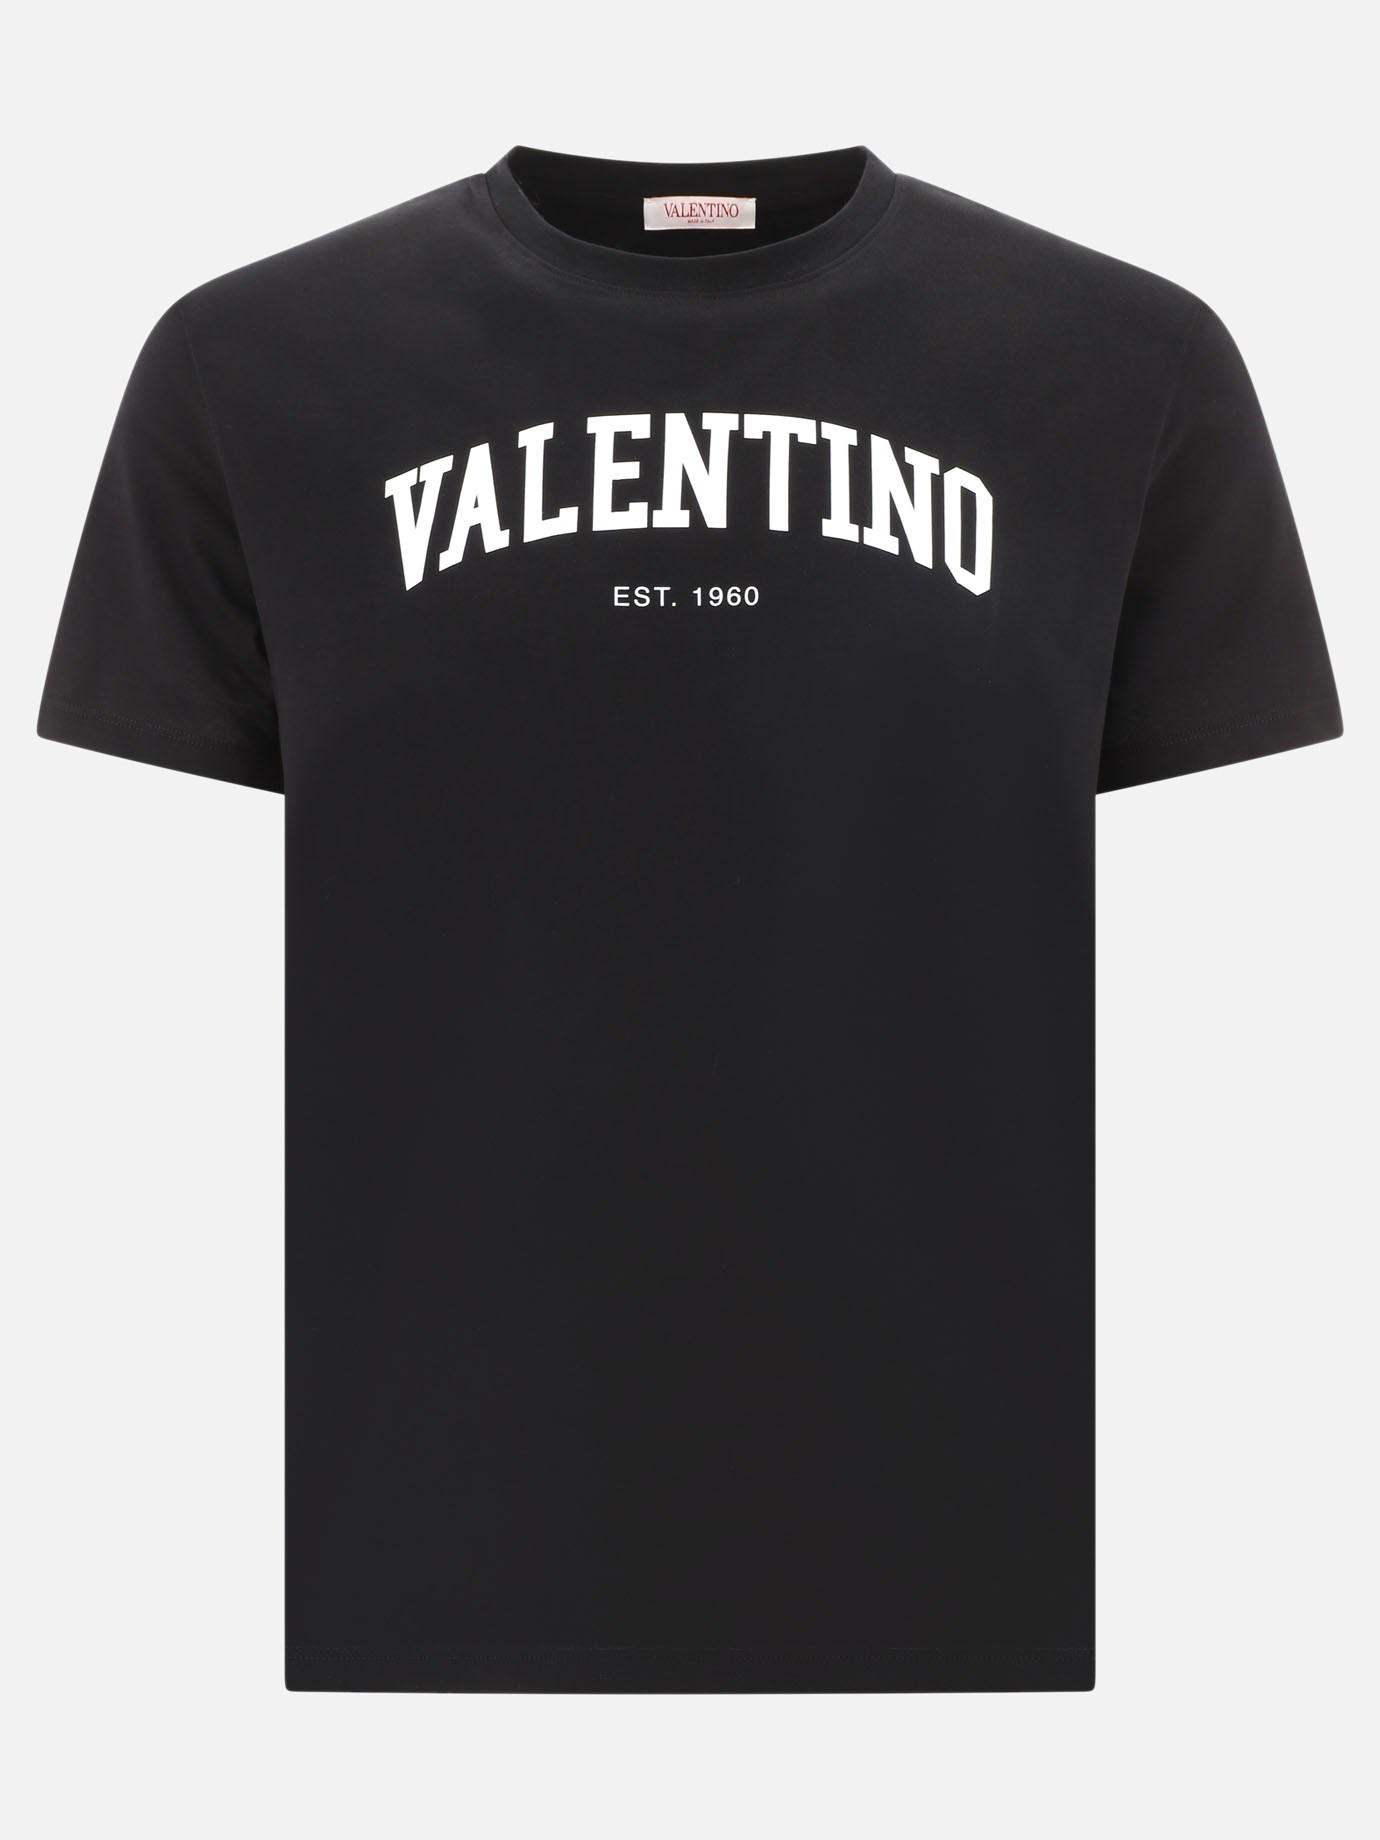 T-shirt  Valentino Est. 1960 by Valentino - 3